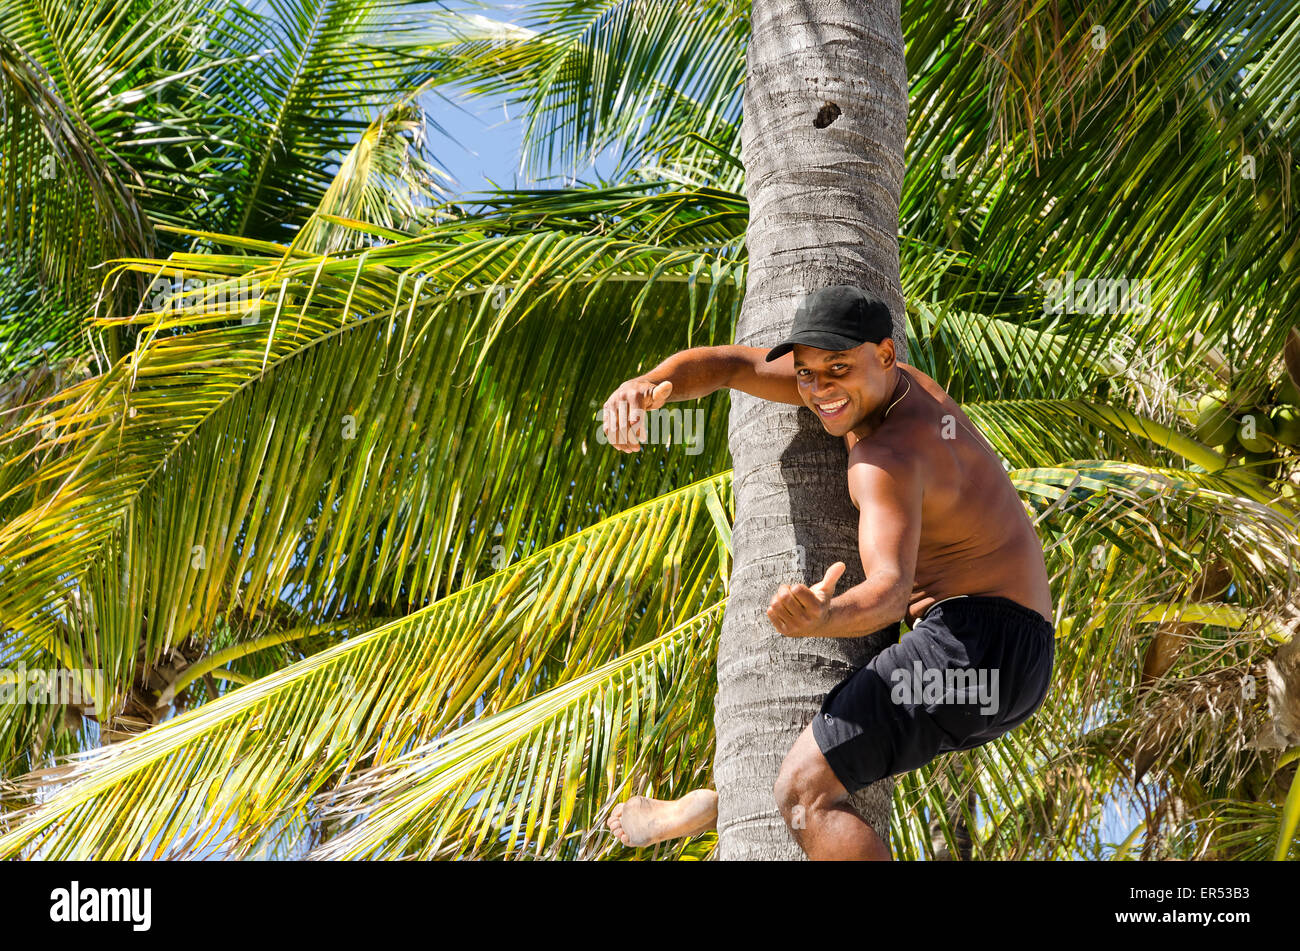 Miami beach, Florida man climbing coconut tree Stock Photo